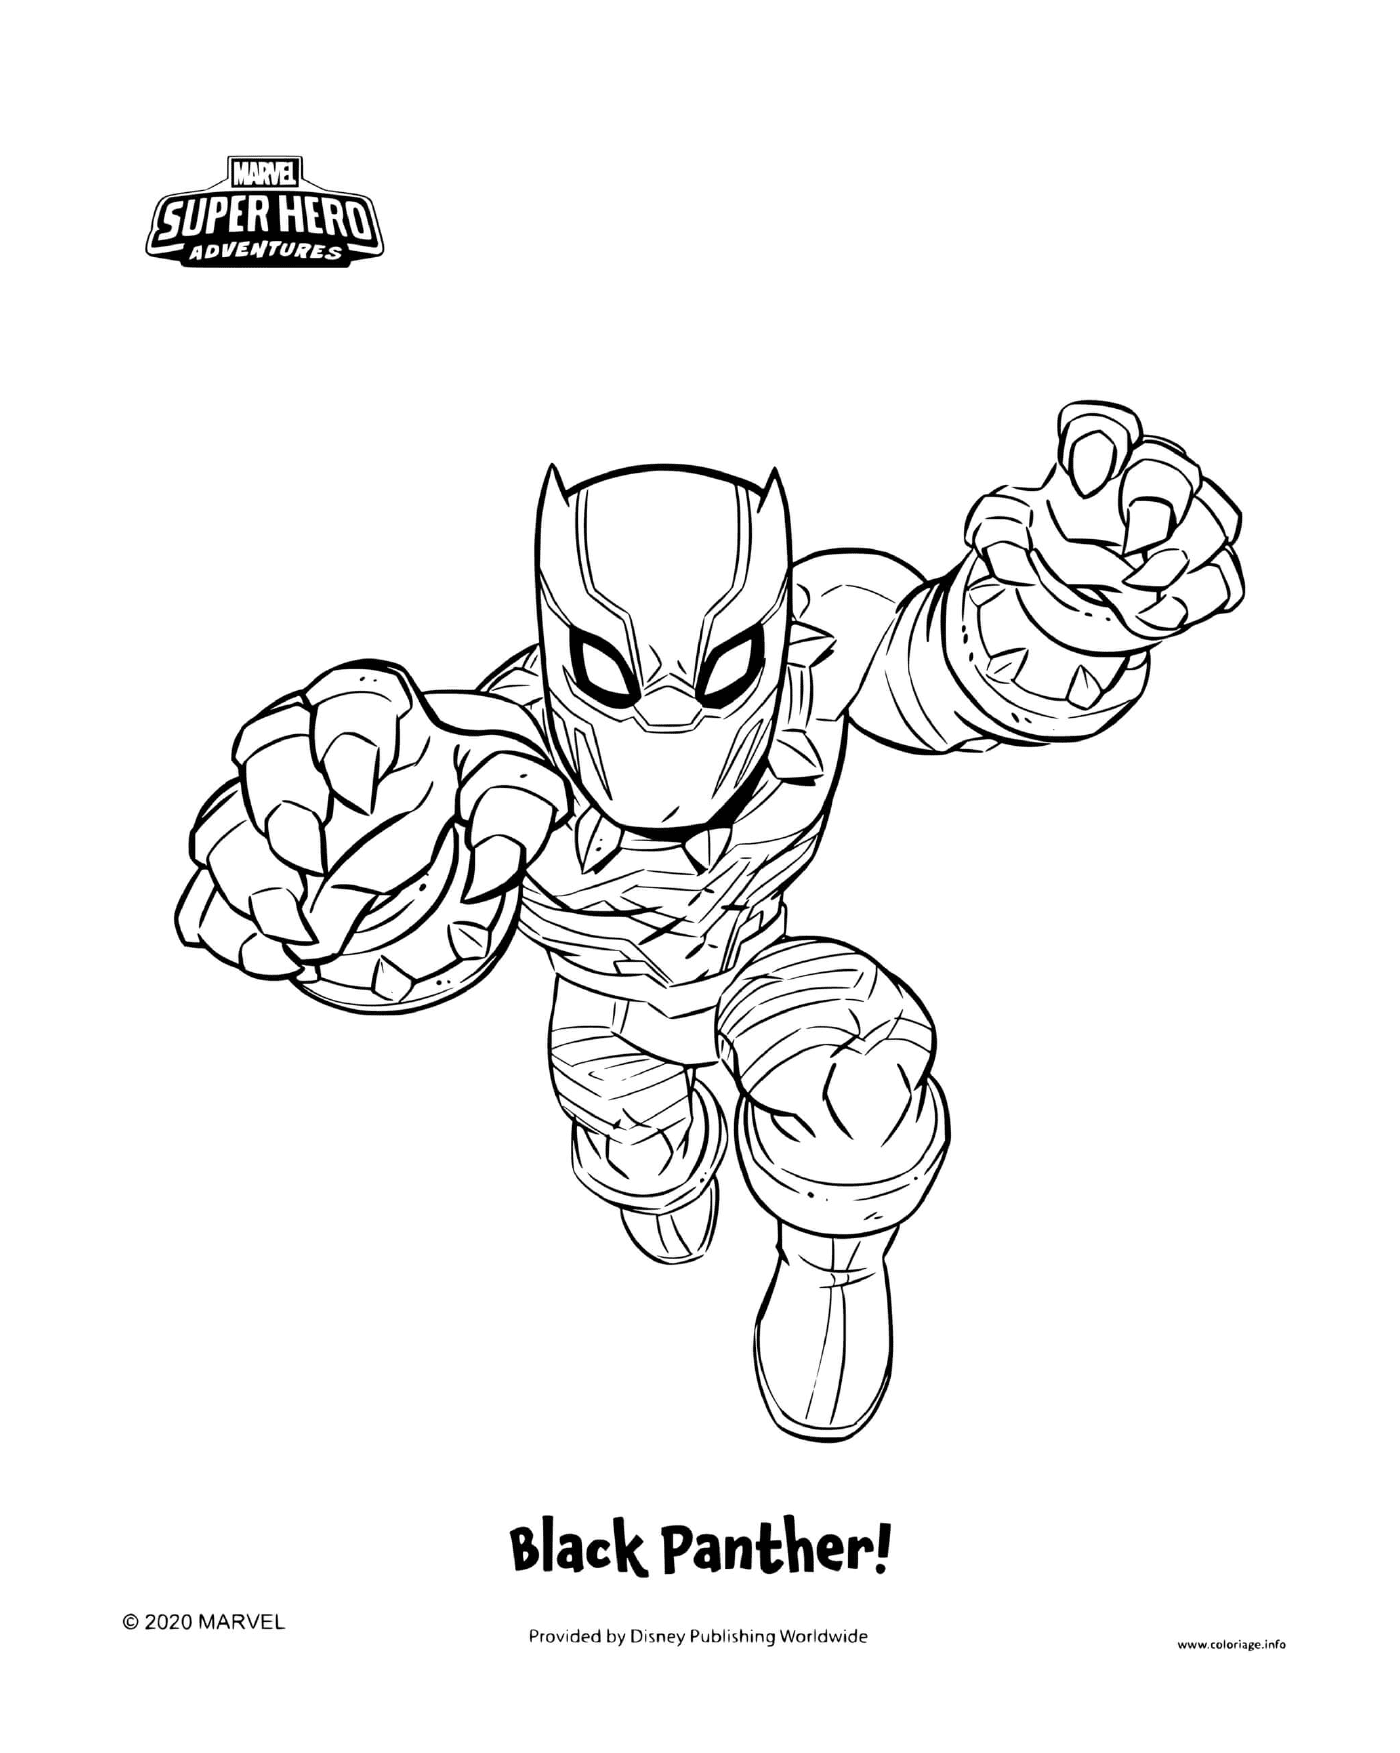  Черный пантер Marvel Super Heroes 